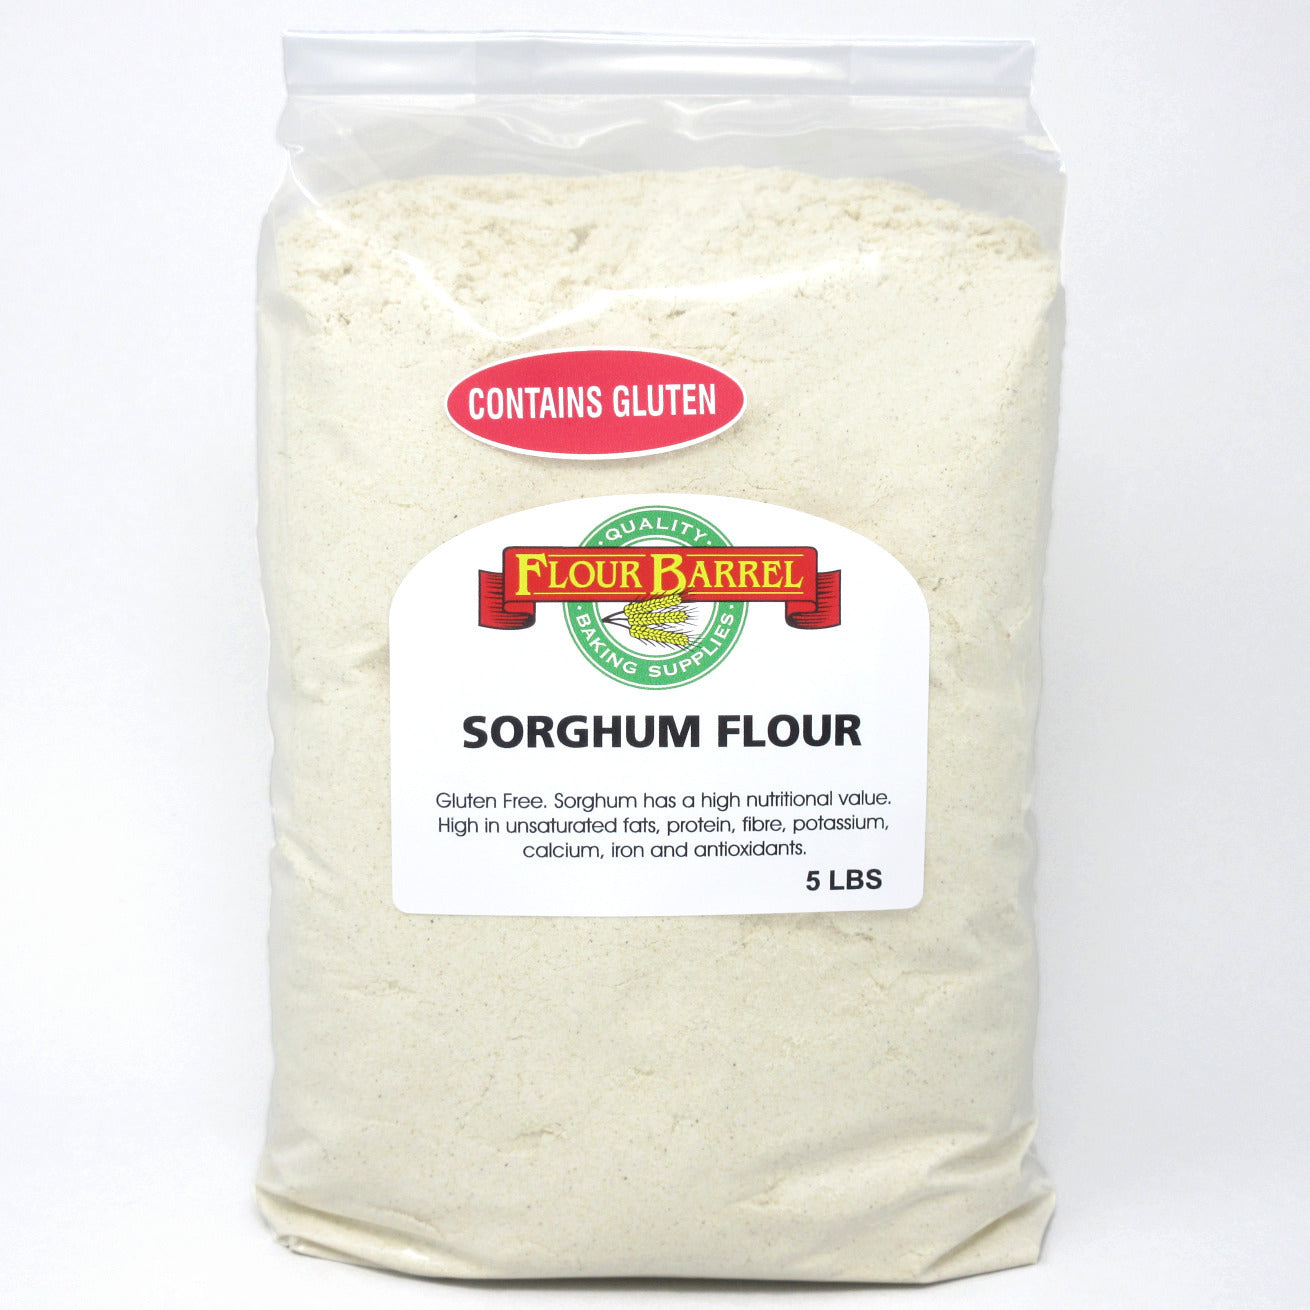 Flour Barrel product image - Sorghum Flour